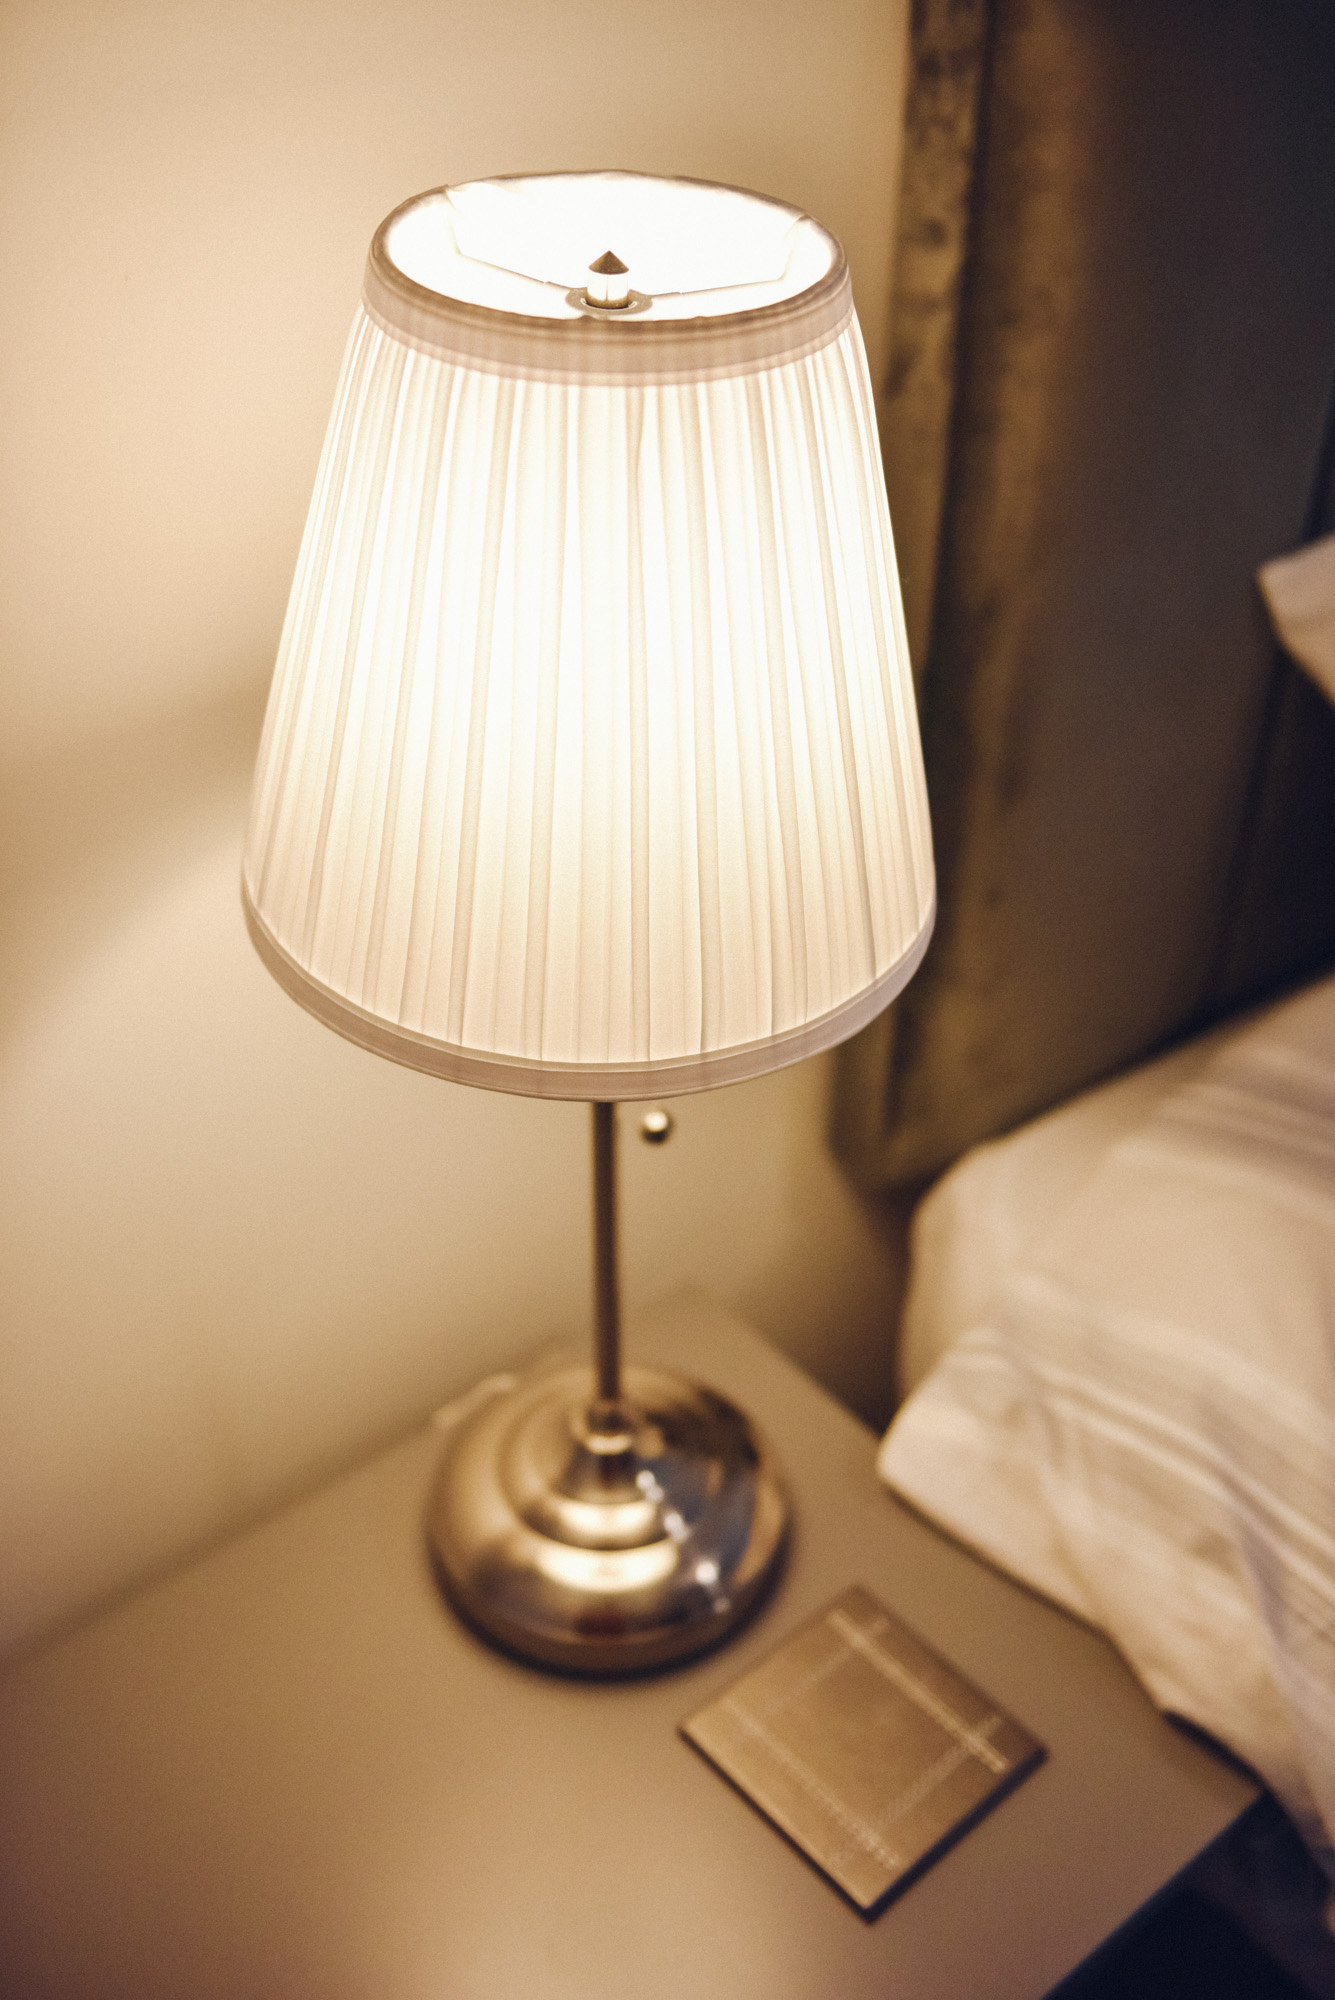 Contemporary lamp in bedroom